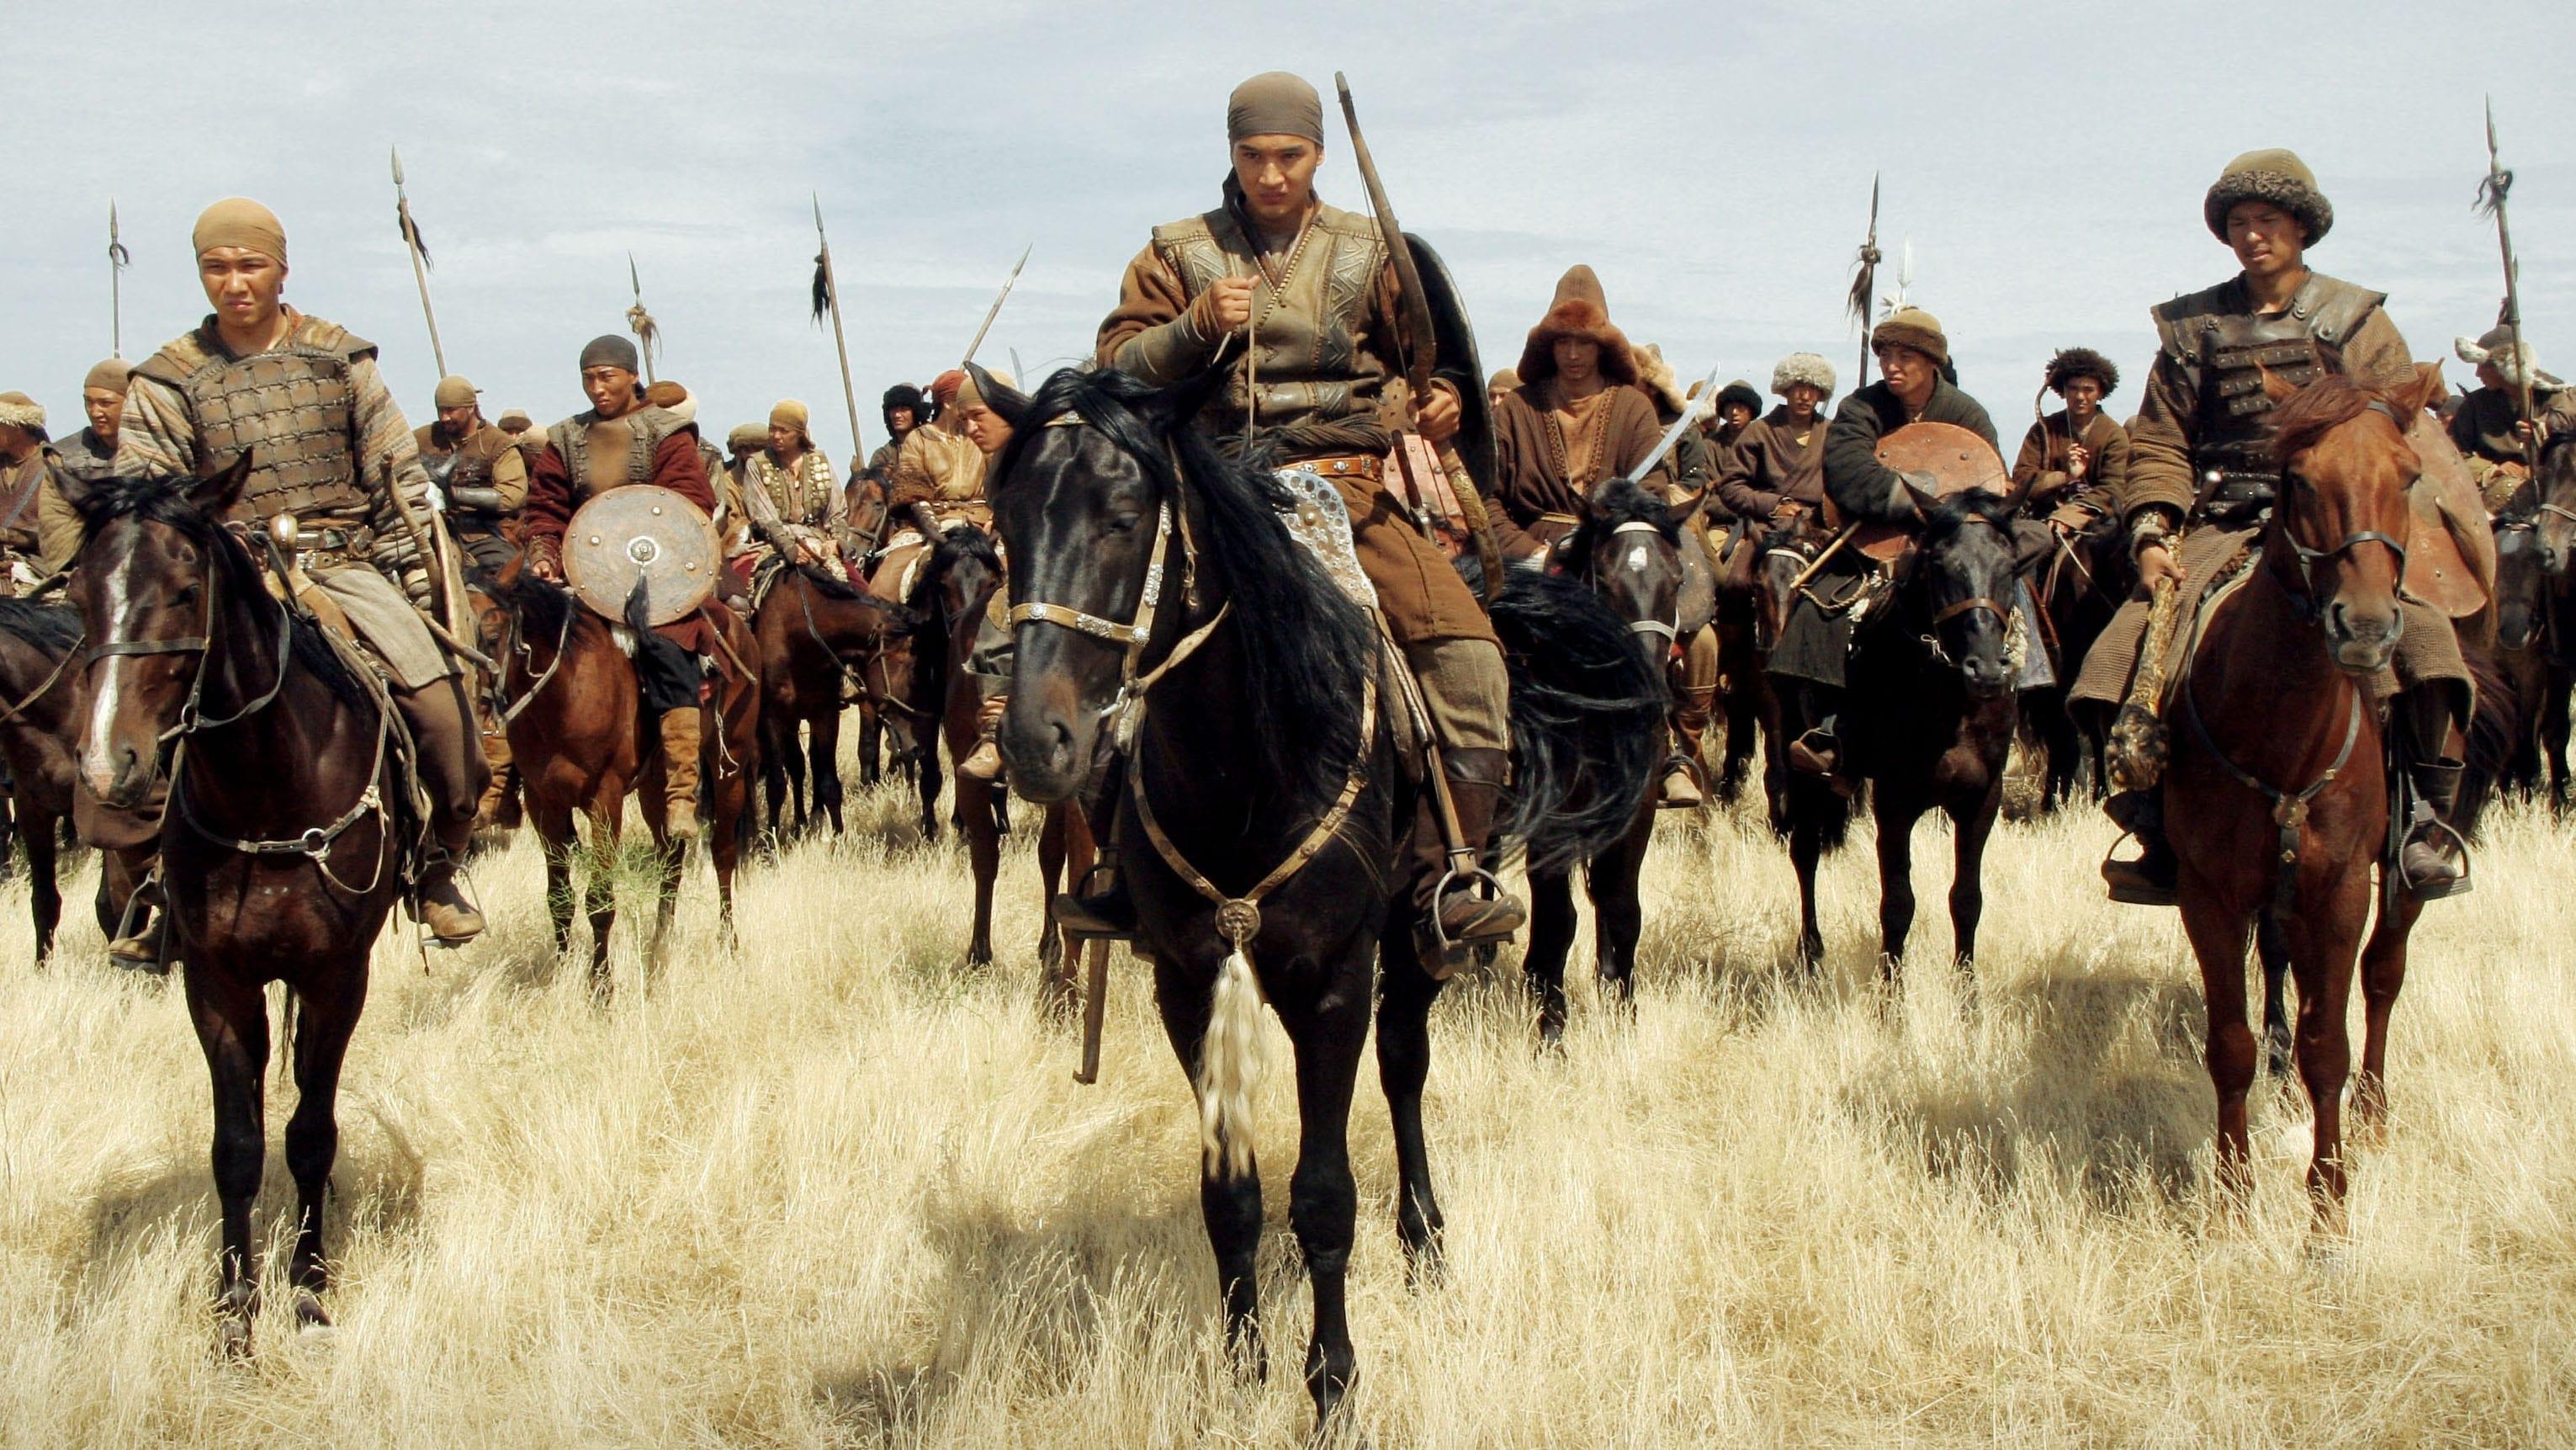 Myn Bala: Warriors of the Steppe backdrop